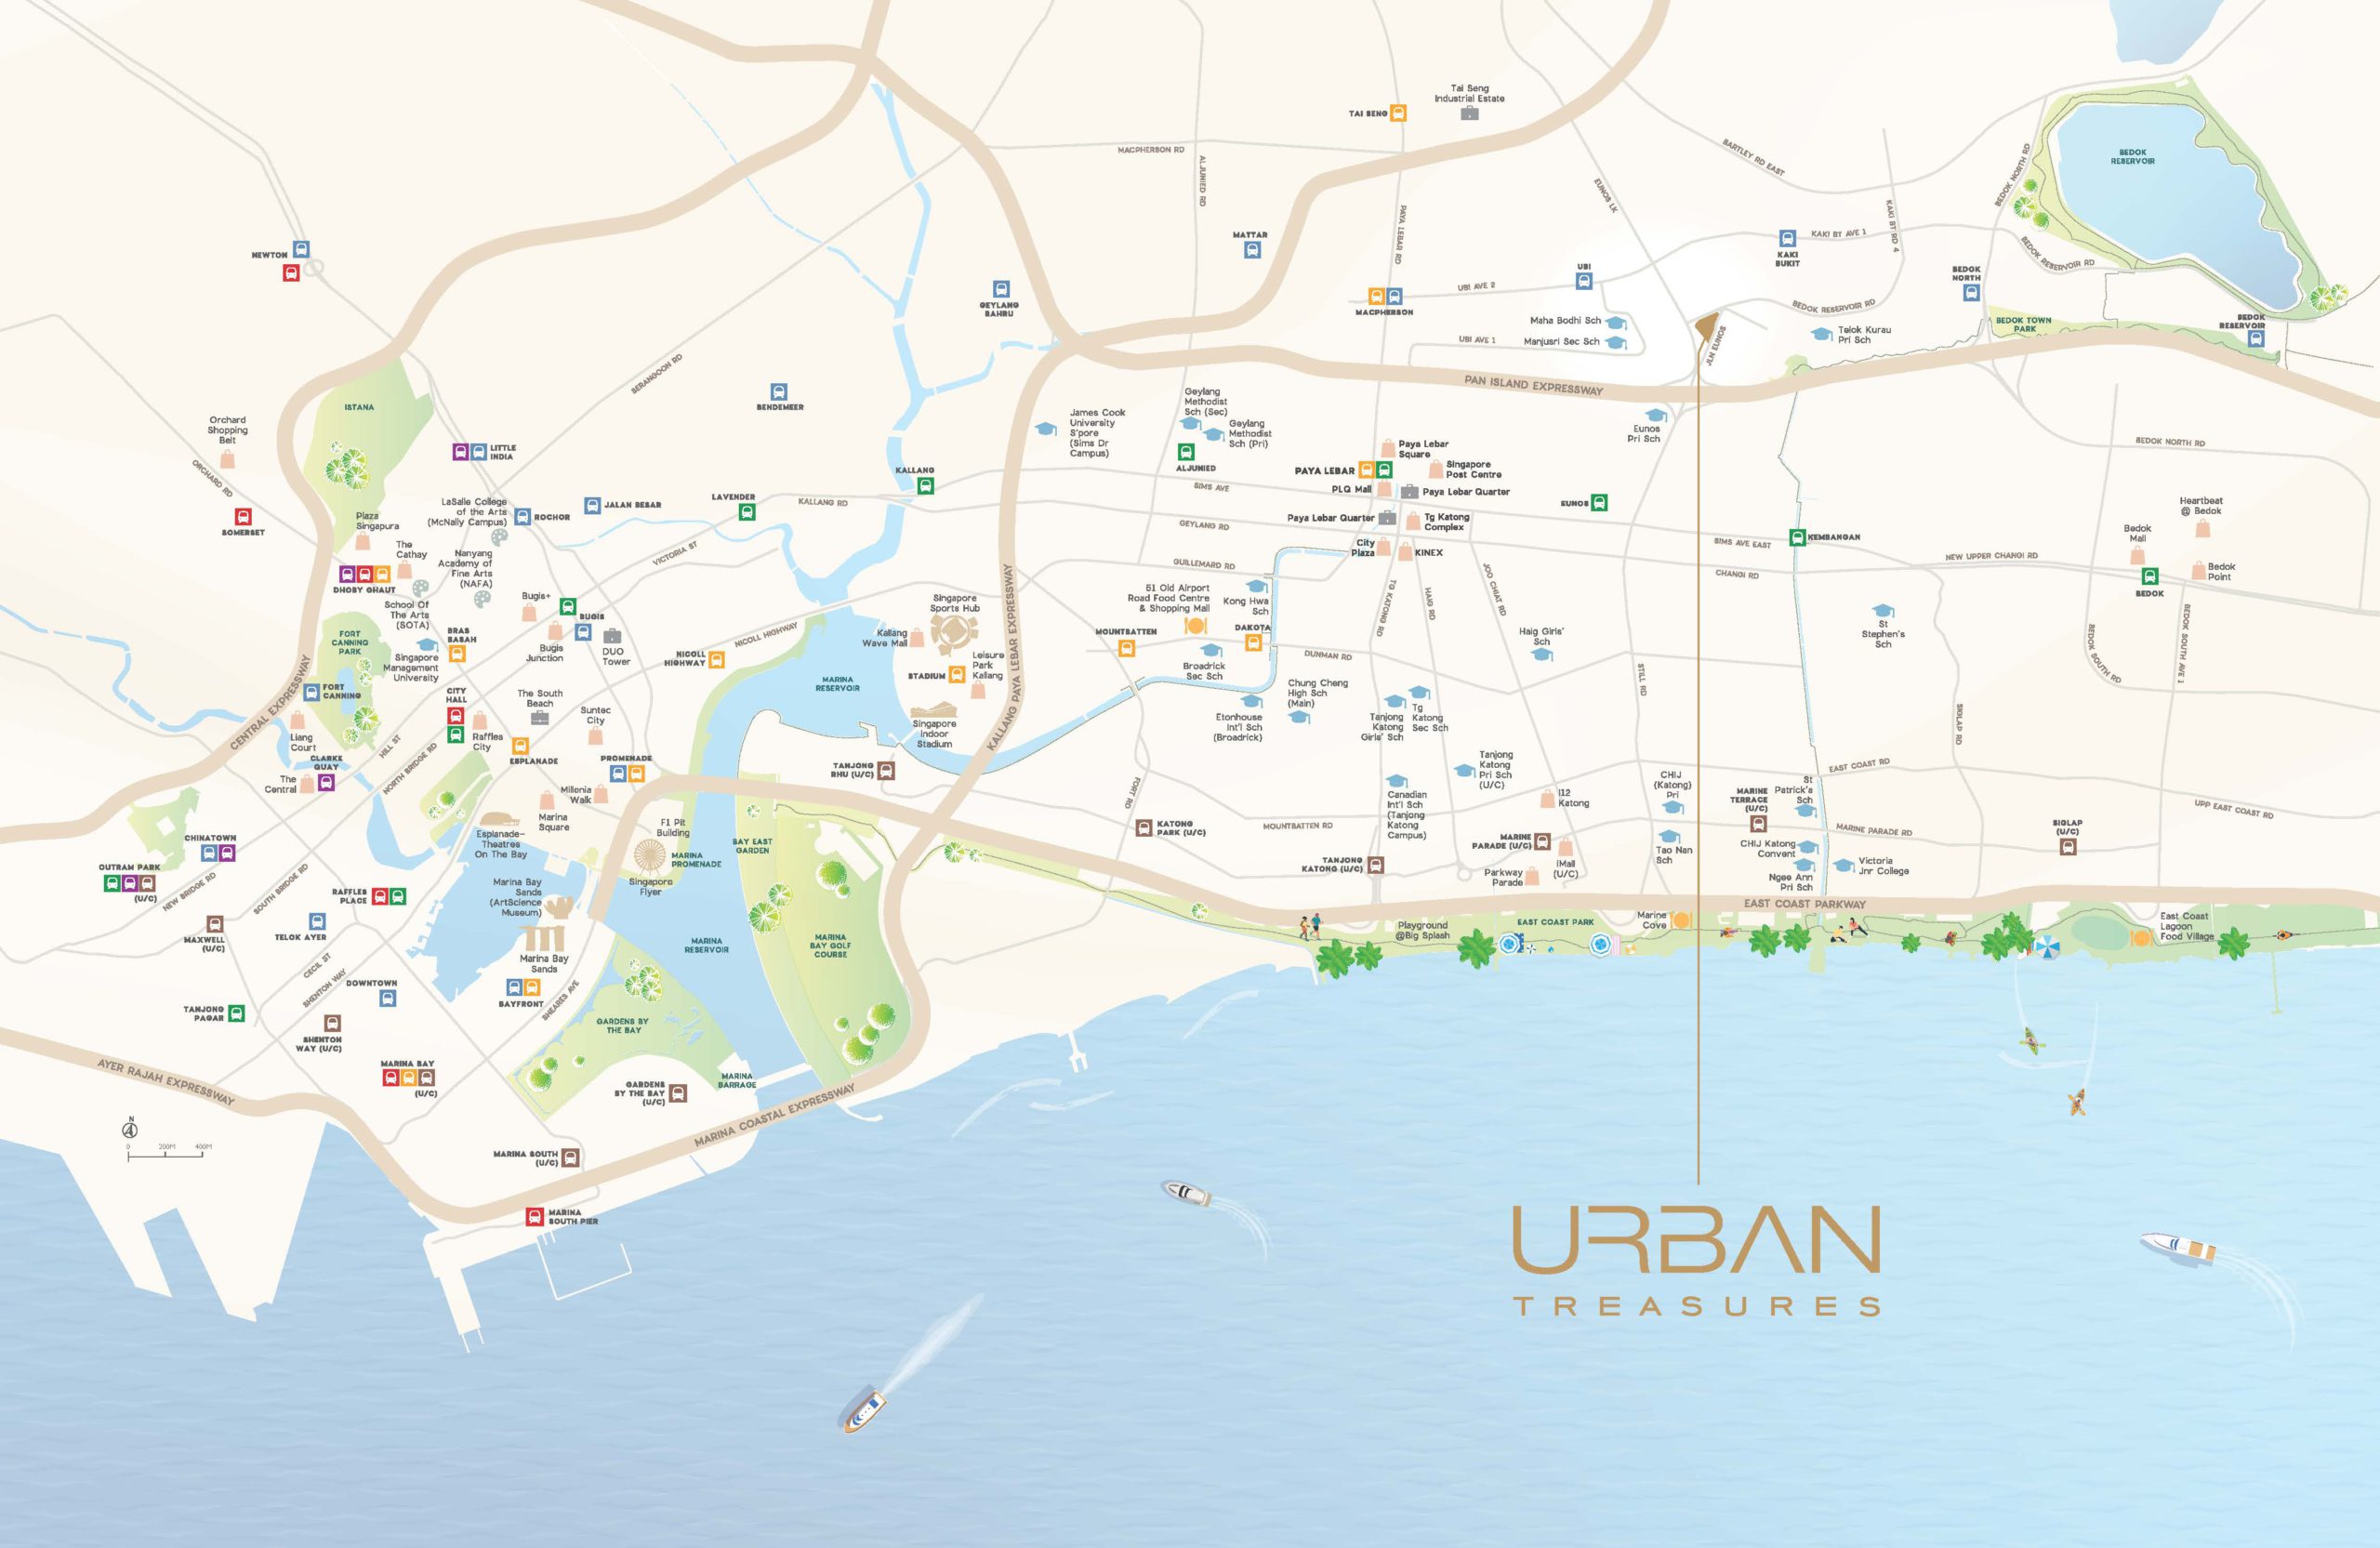 Urban Treasures Location Map